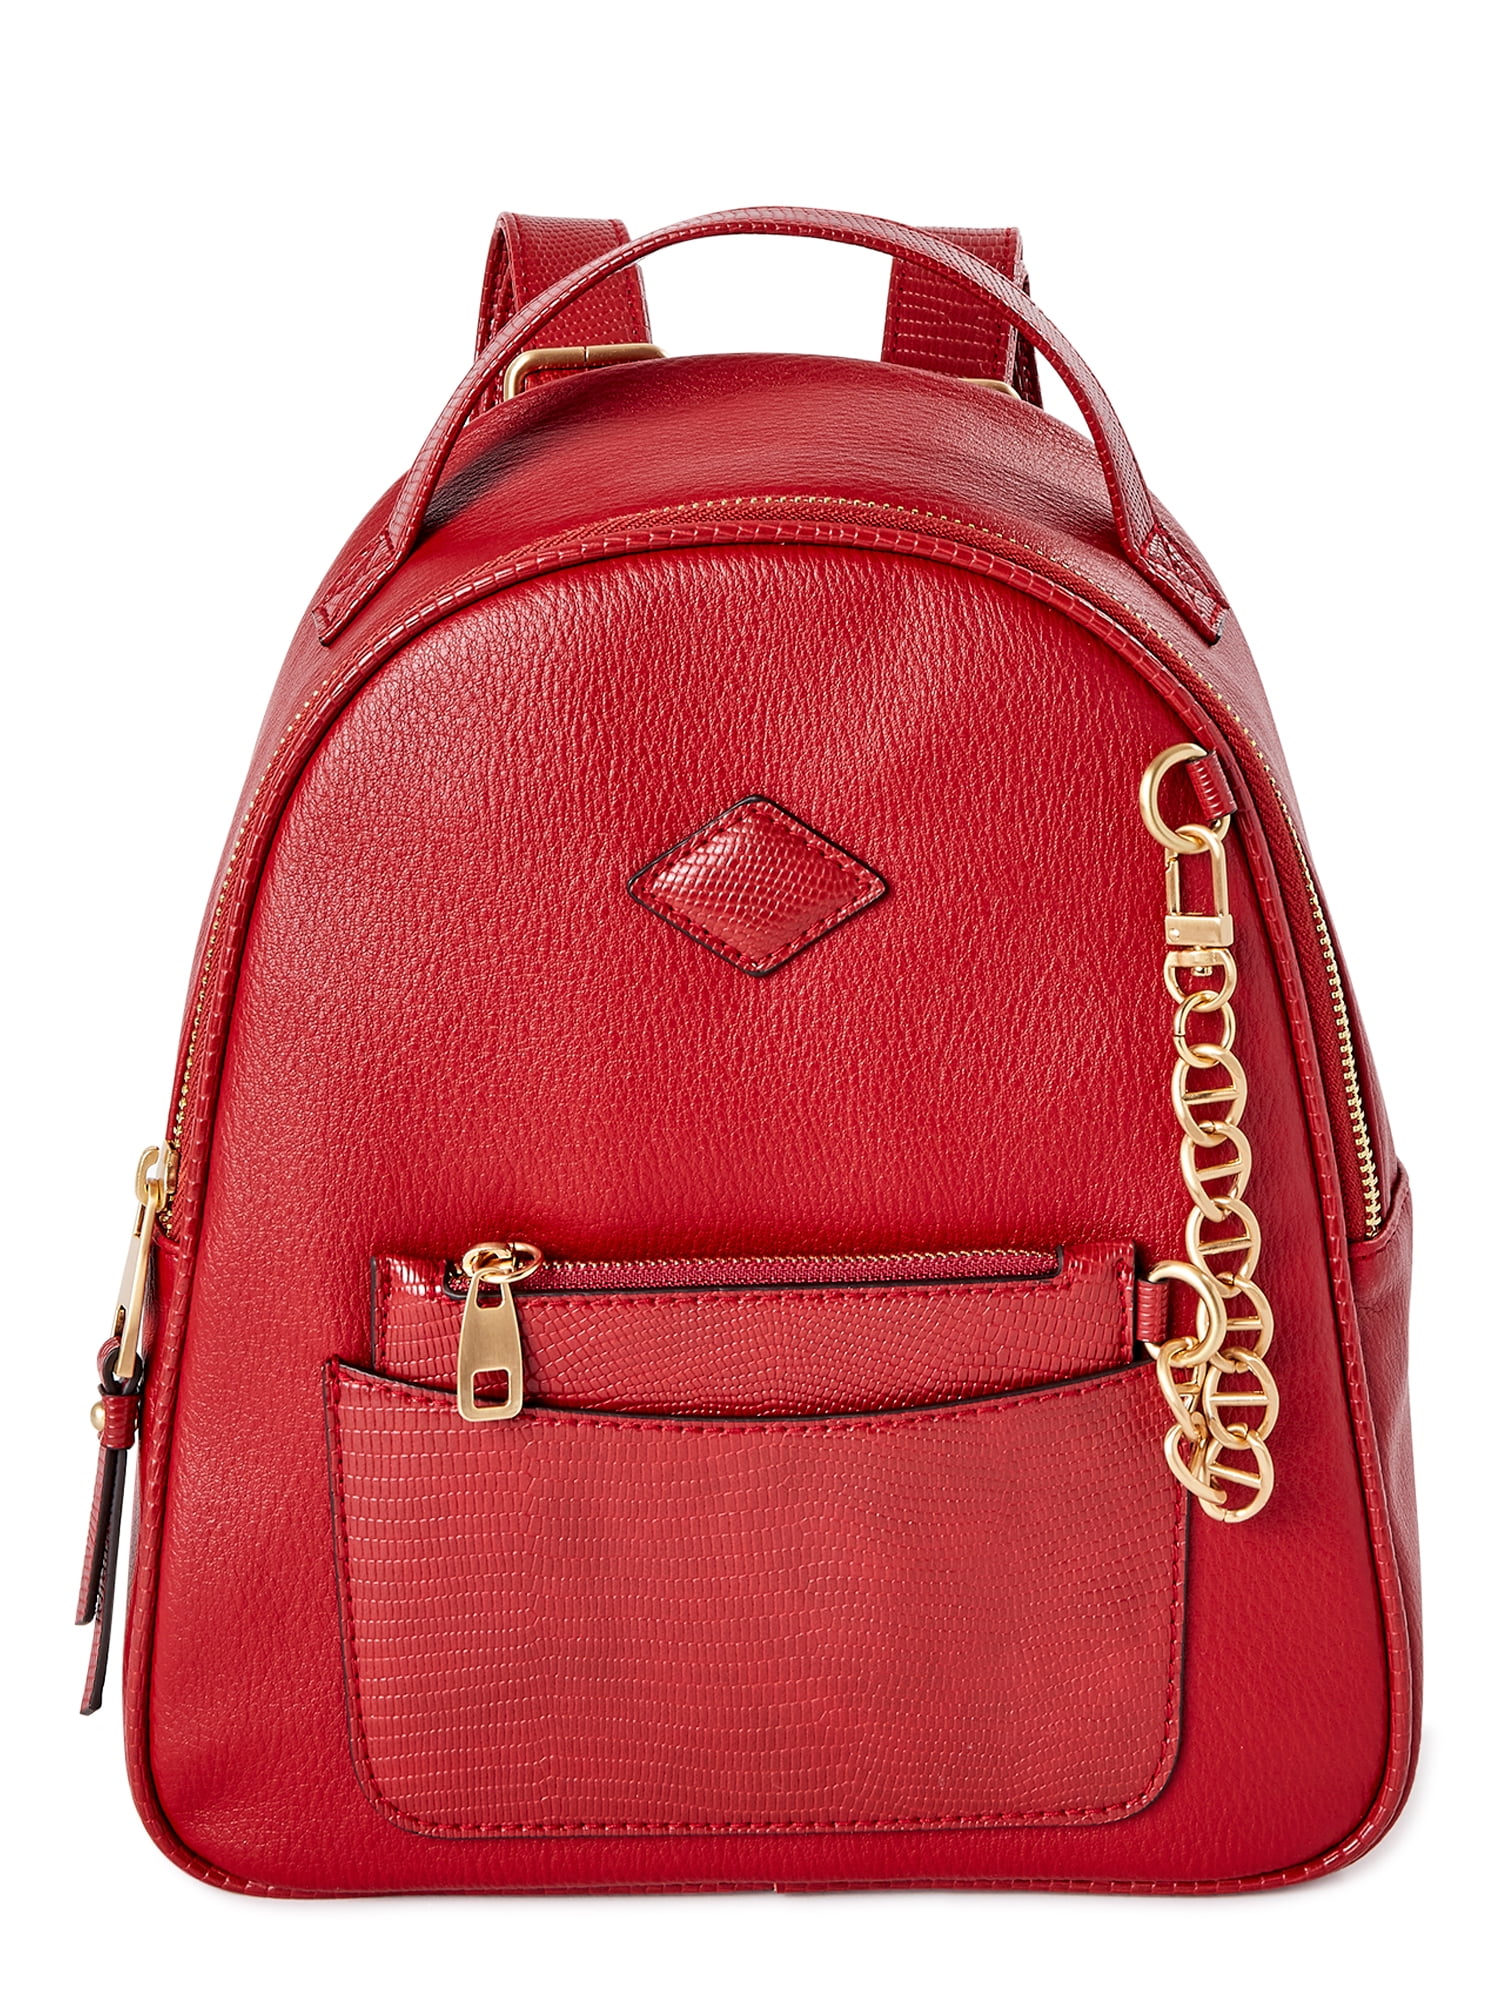 Purses And Handbags For Women Shoulder Bag Tote Purse Messenger Satchel For  Ladies (Khaki) - Walmart.com